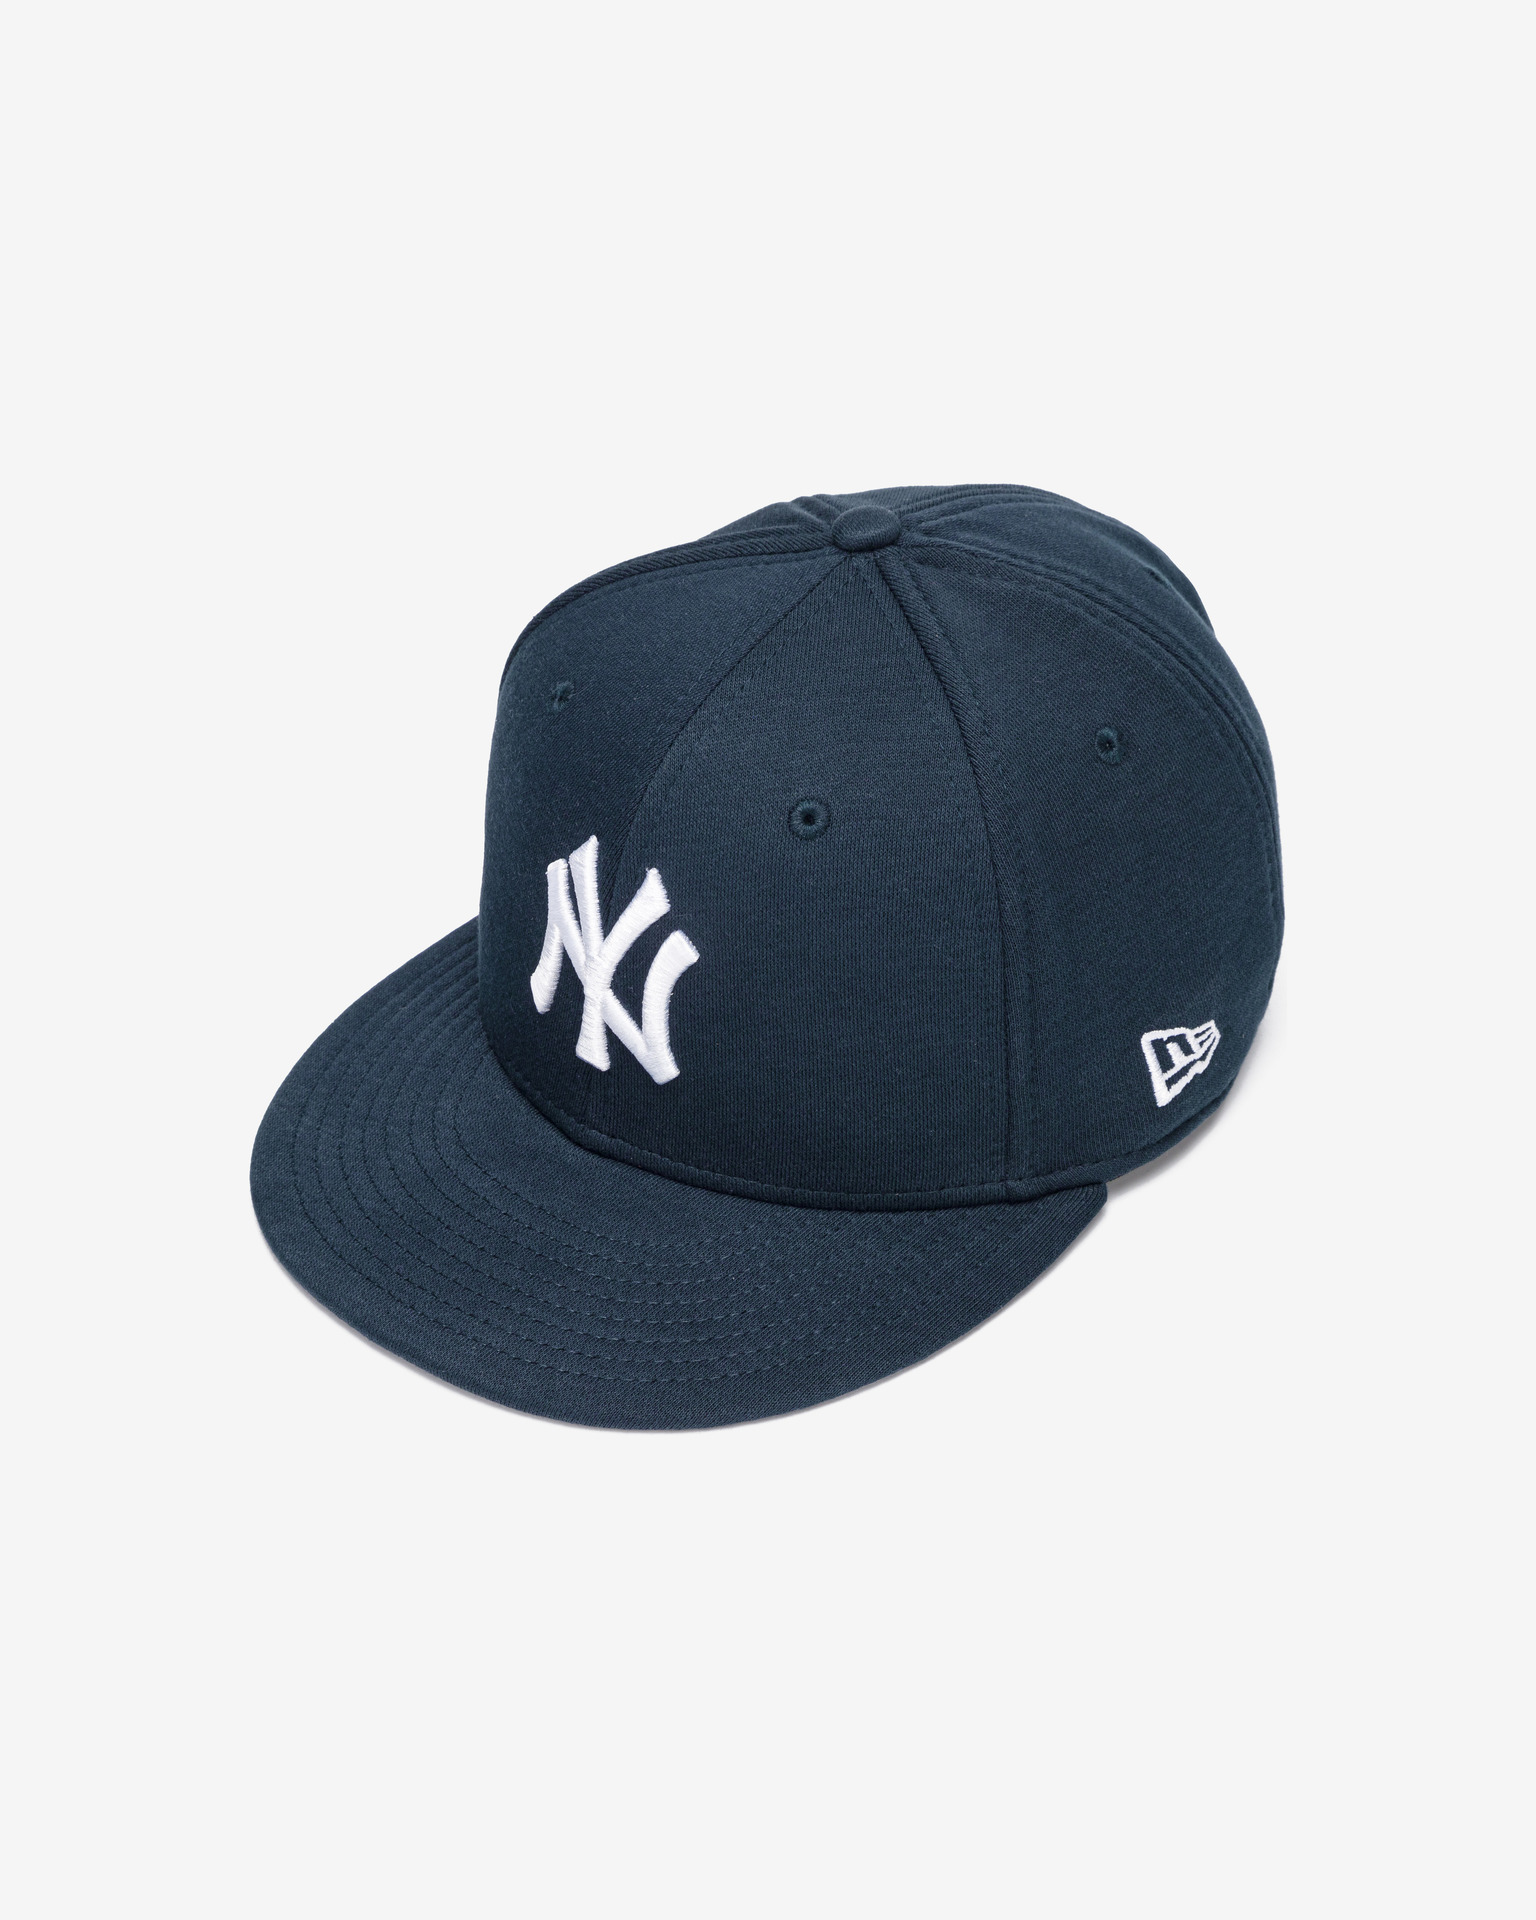 navy blue yankees hat